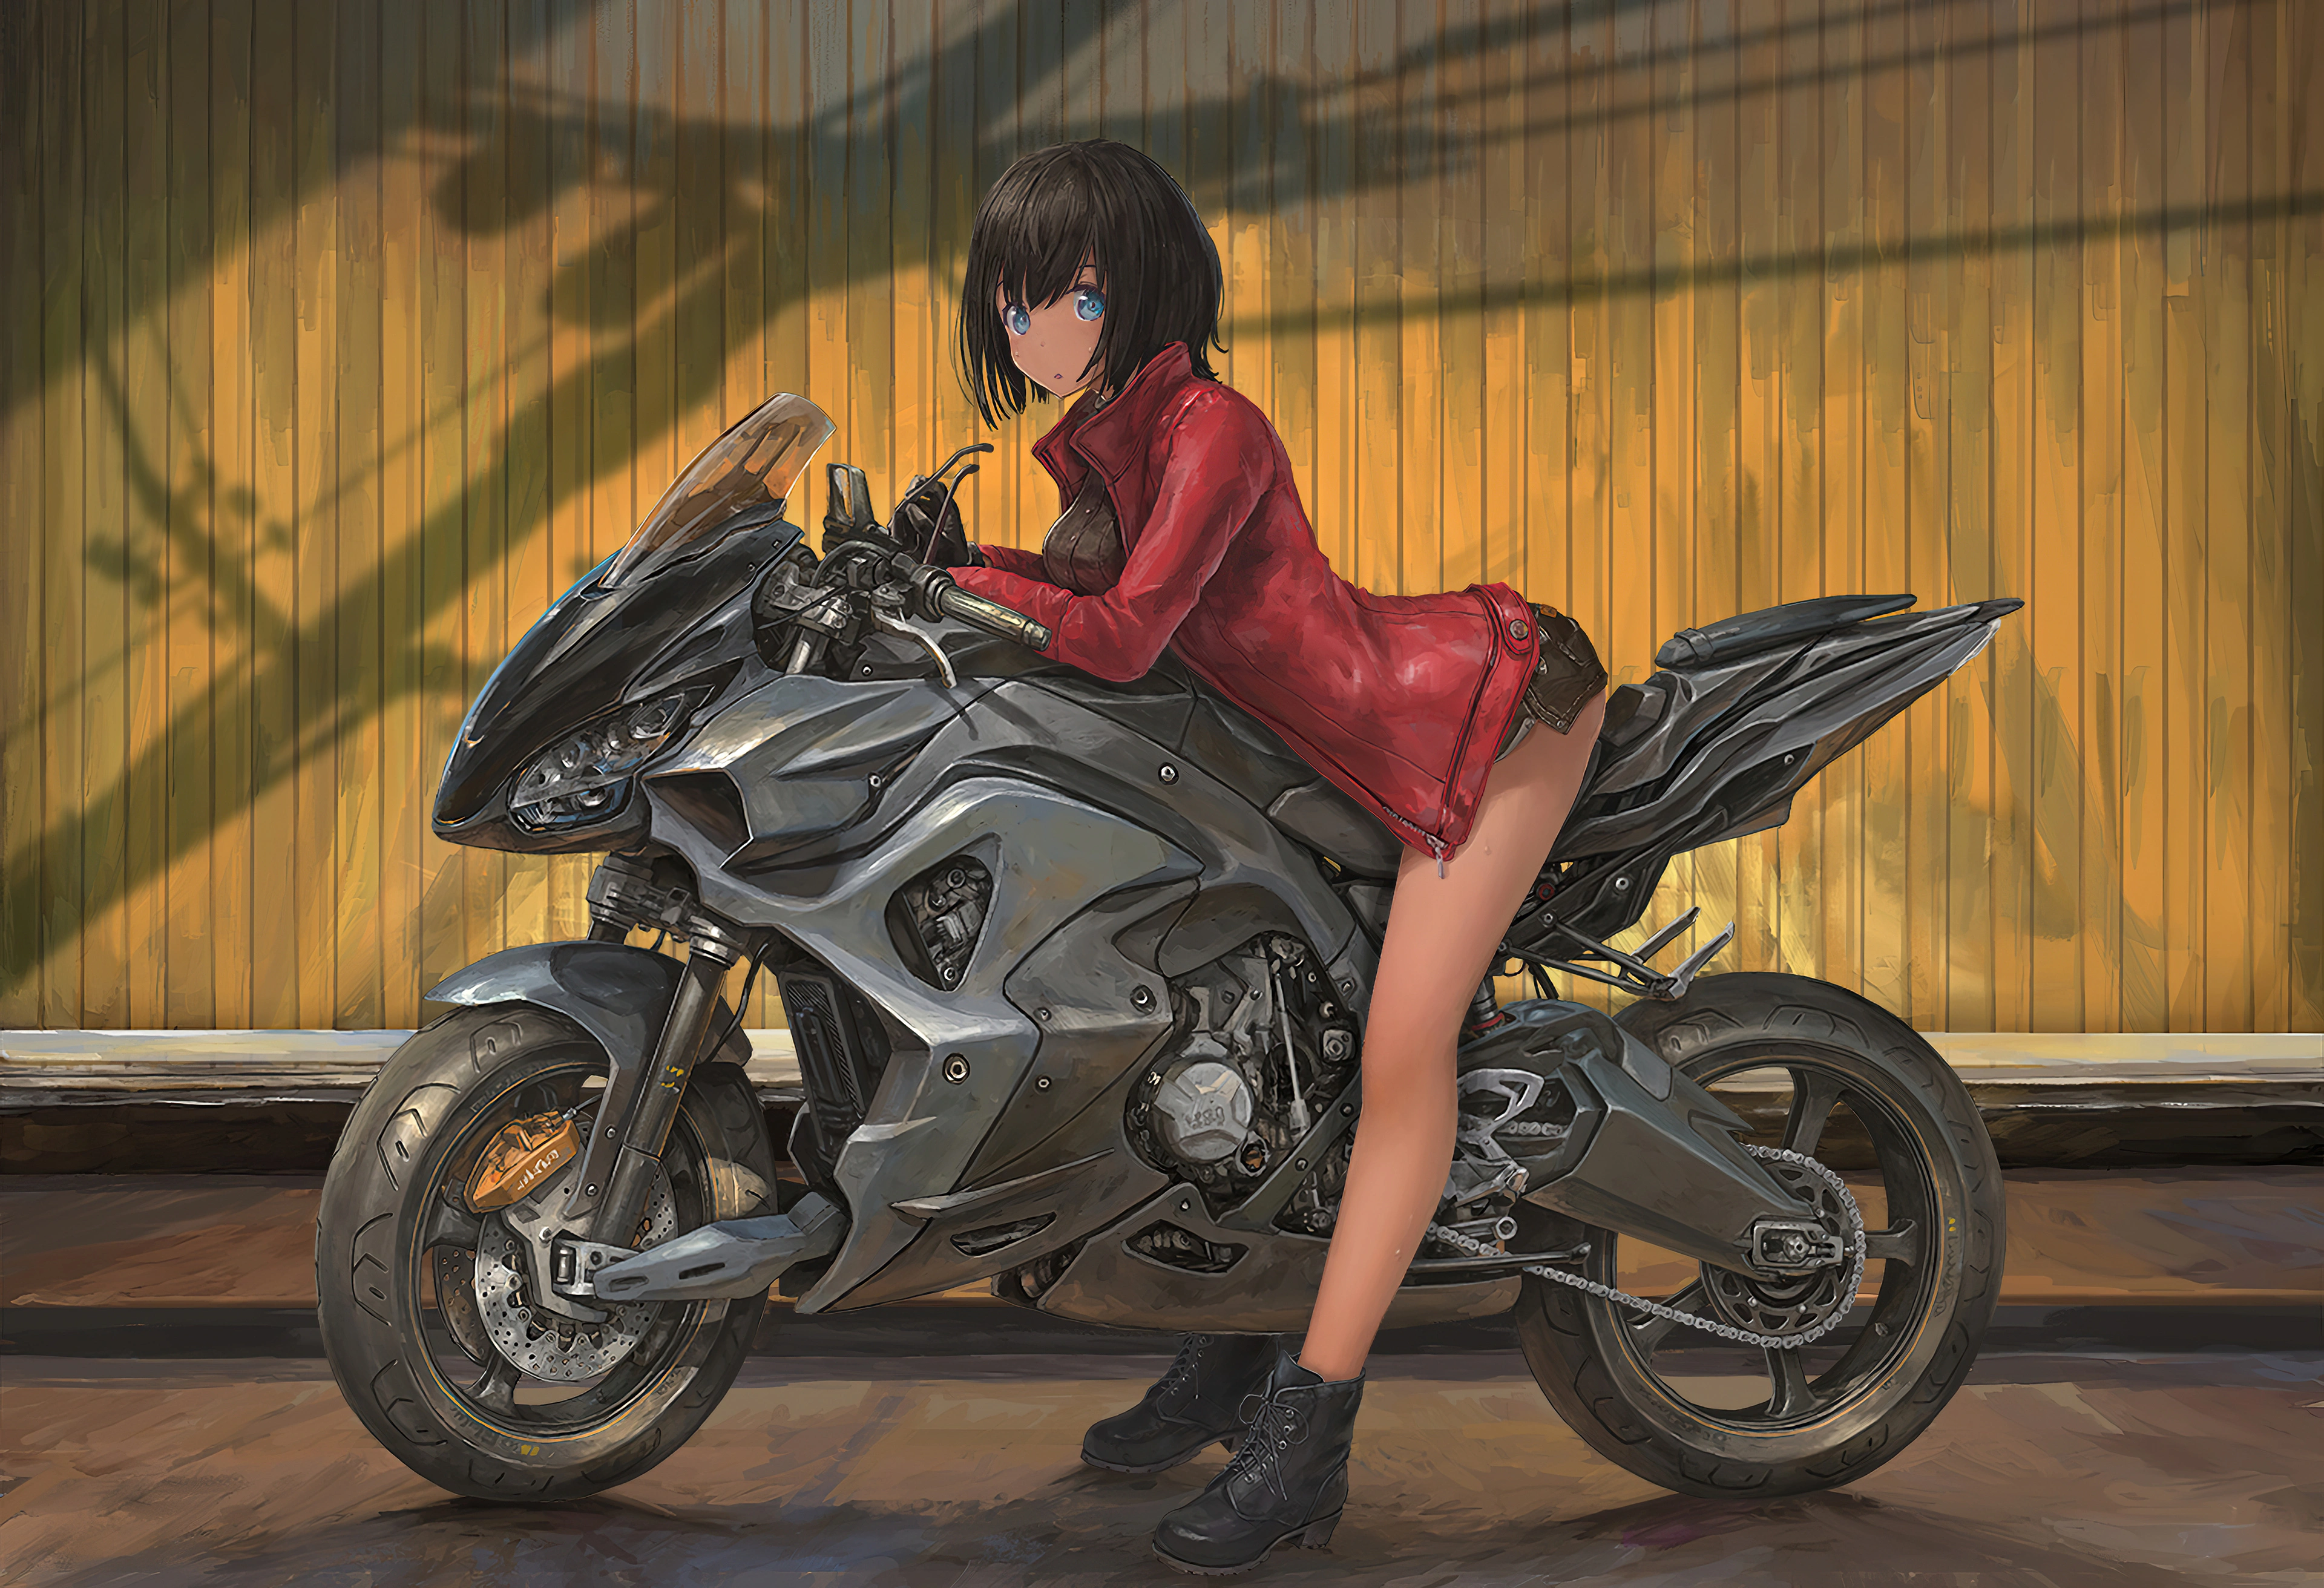 leather jackets anime girl on bike 4k 1660432217